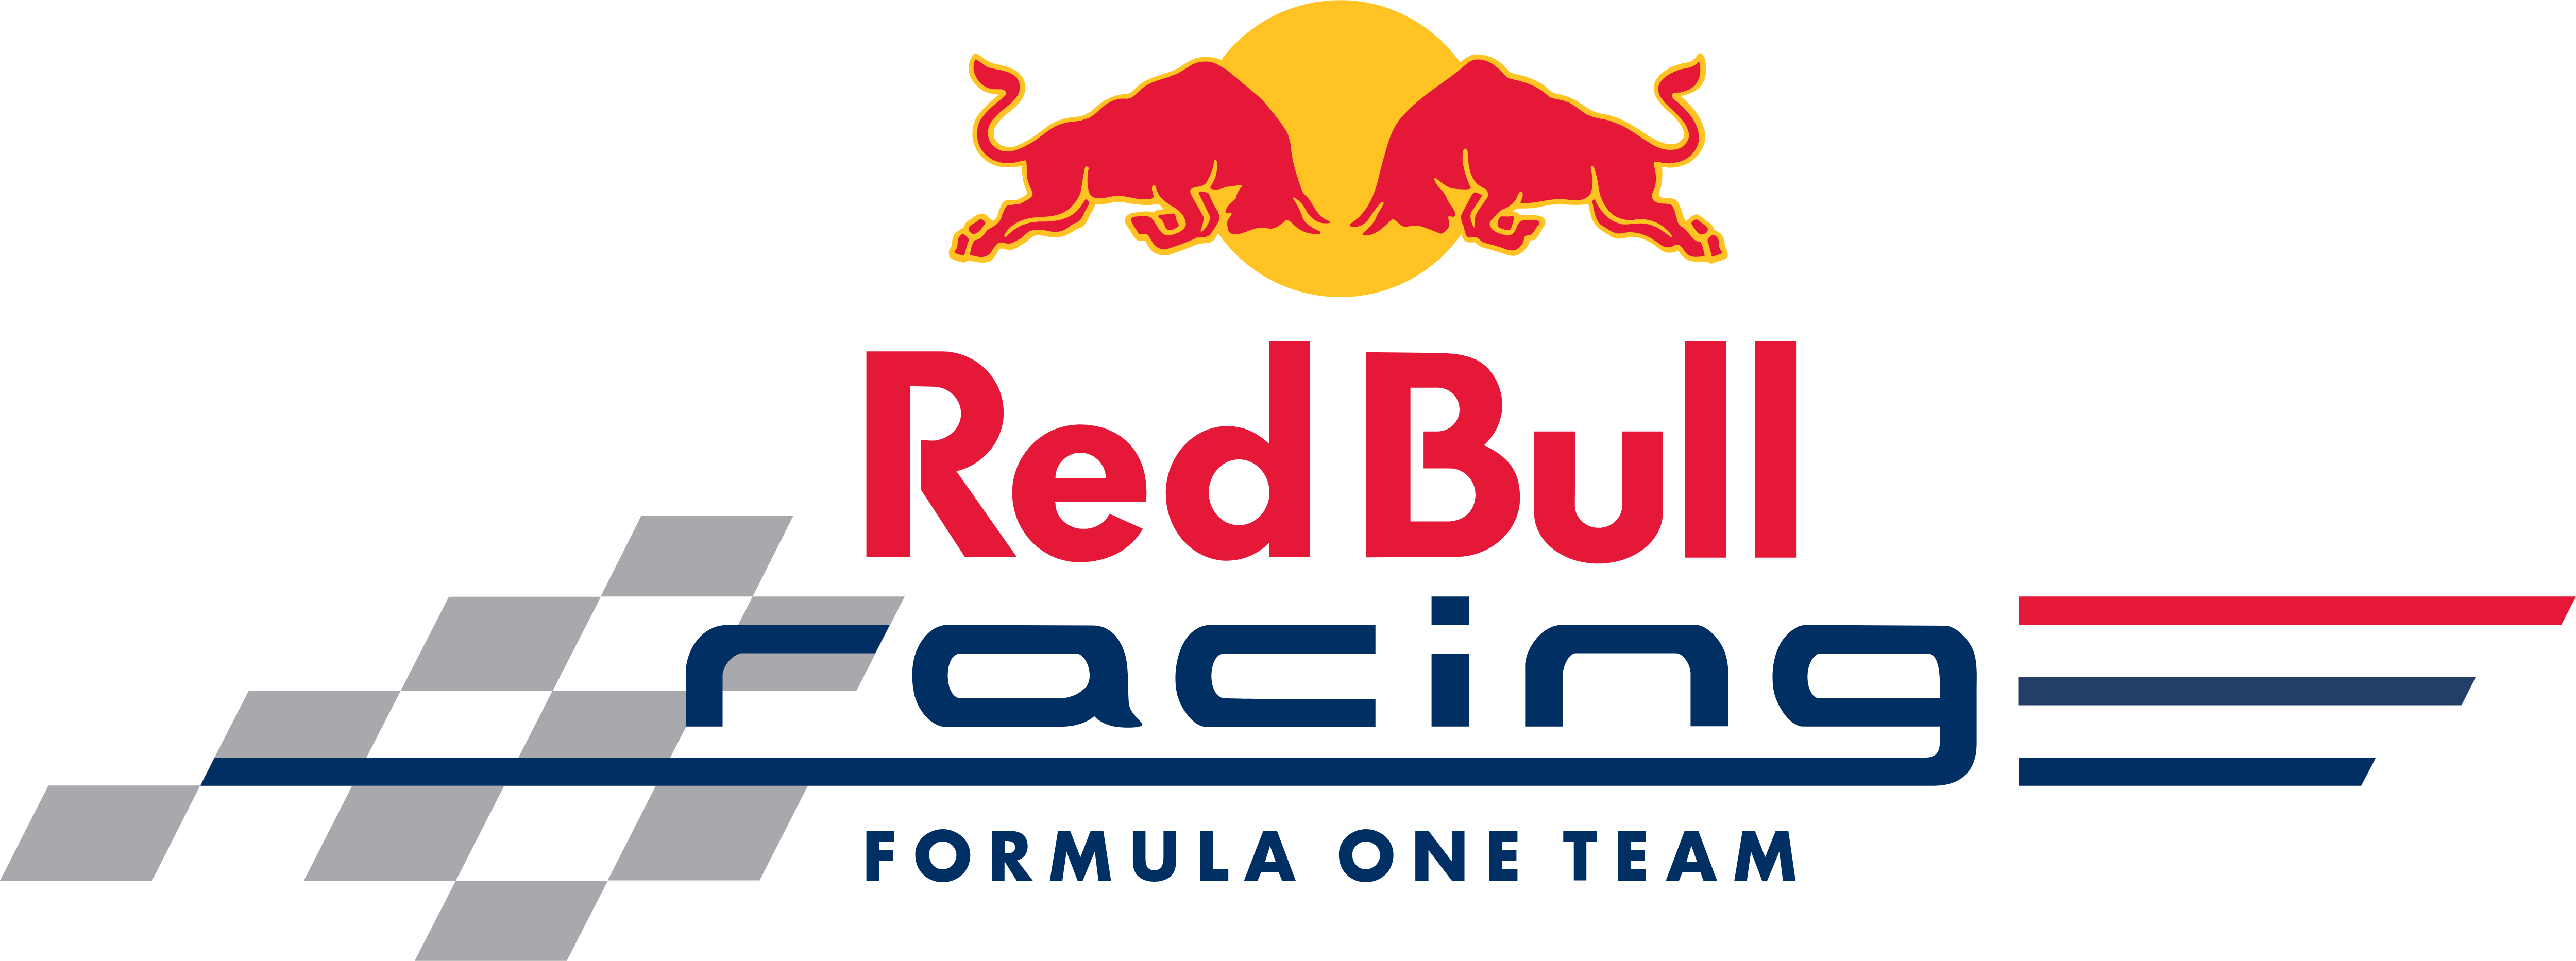 Red Racing Logo - Red Bull Sport – Logos Download